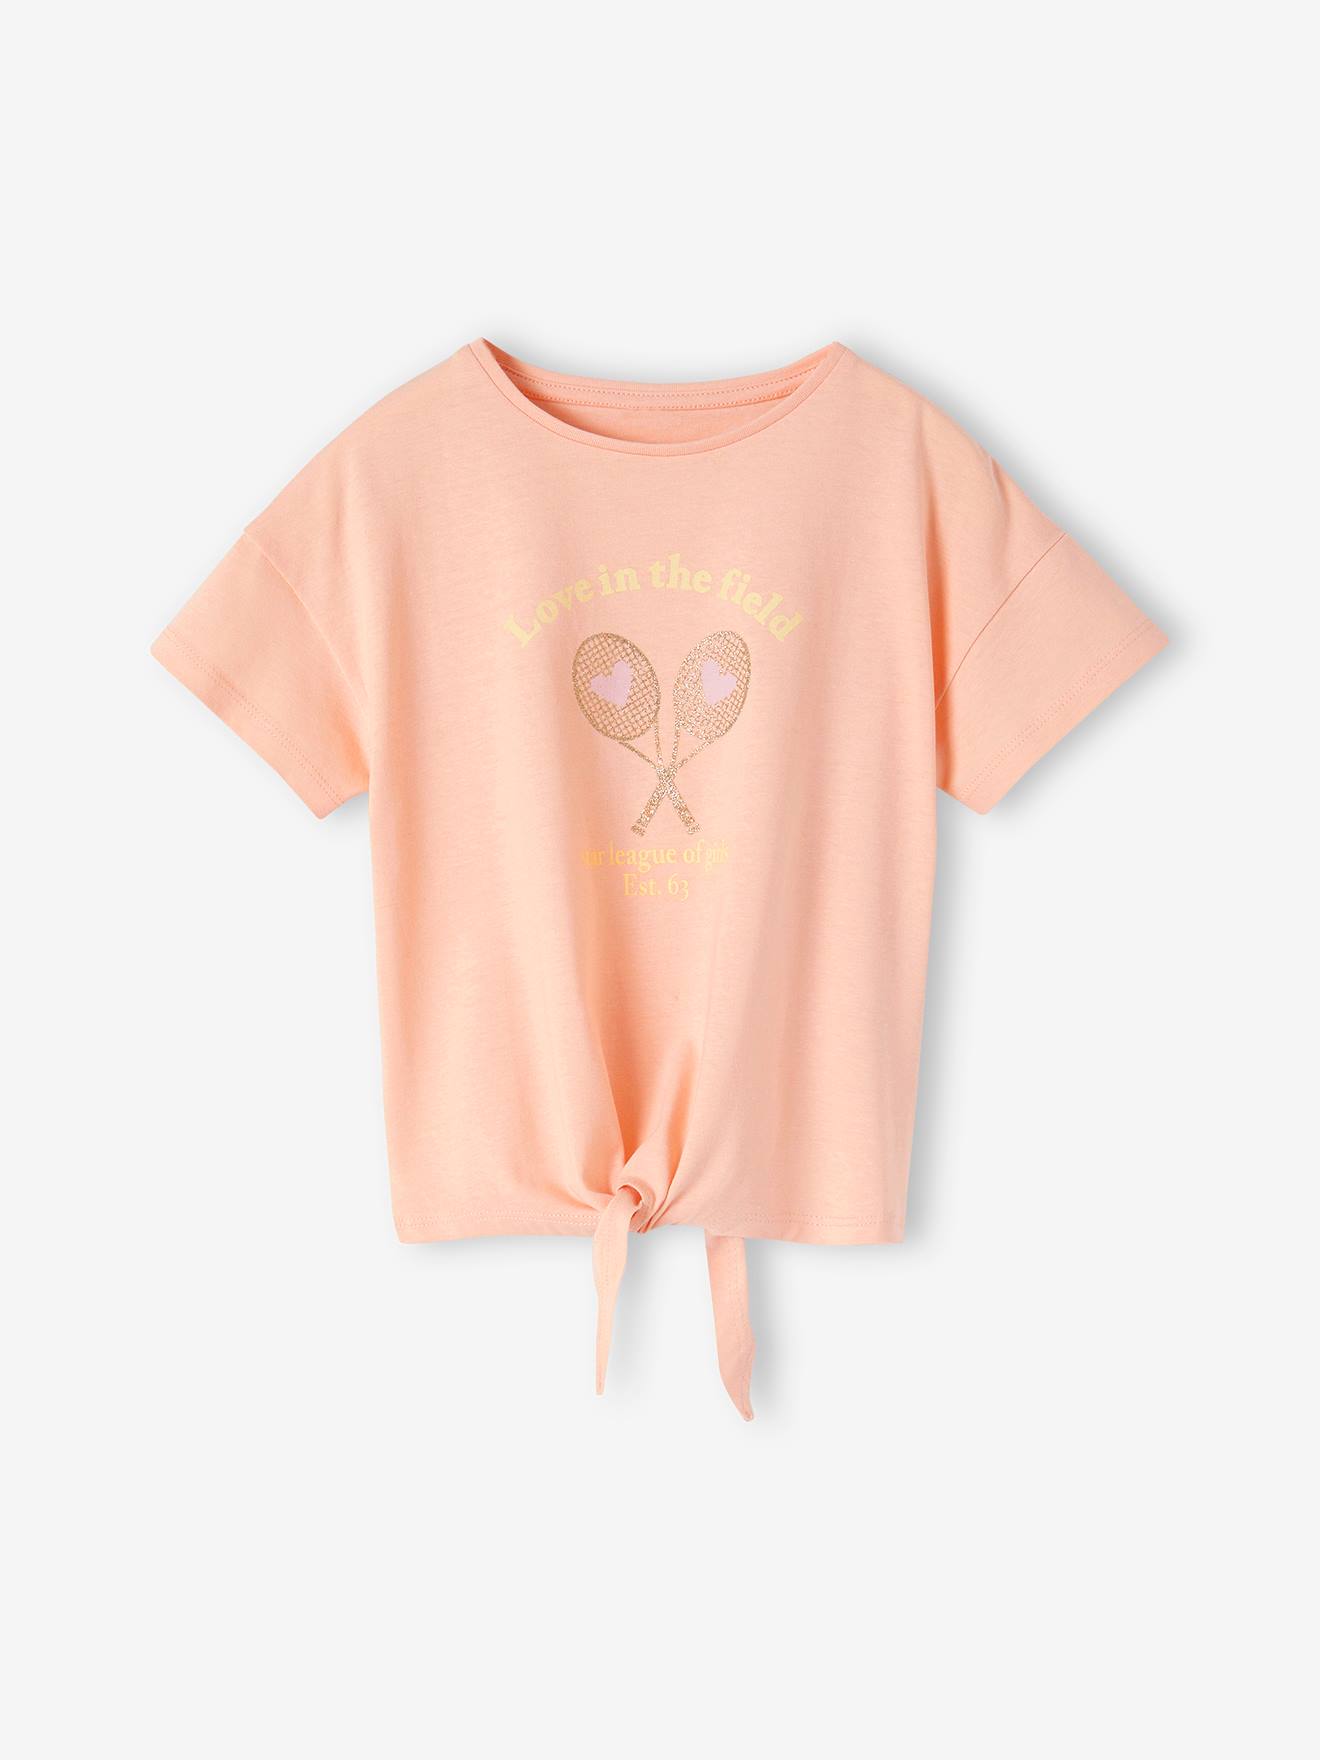 VERTBAUDET Camiseta deportiva estampado raquetas con purpurina para niña coral